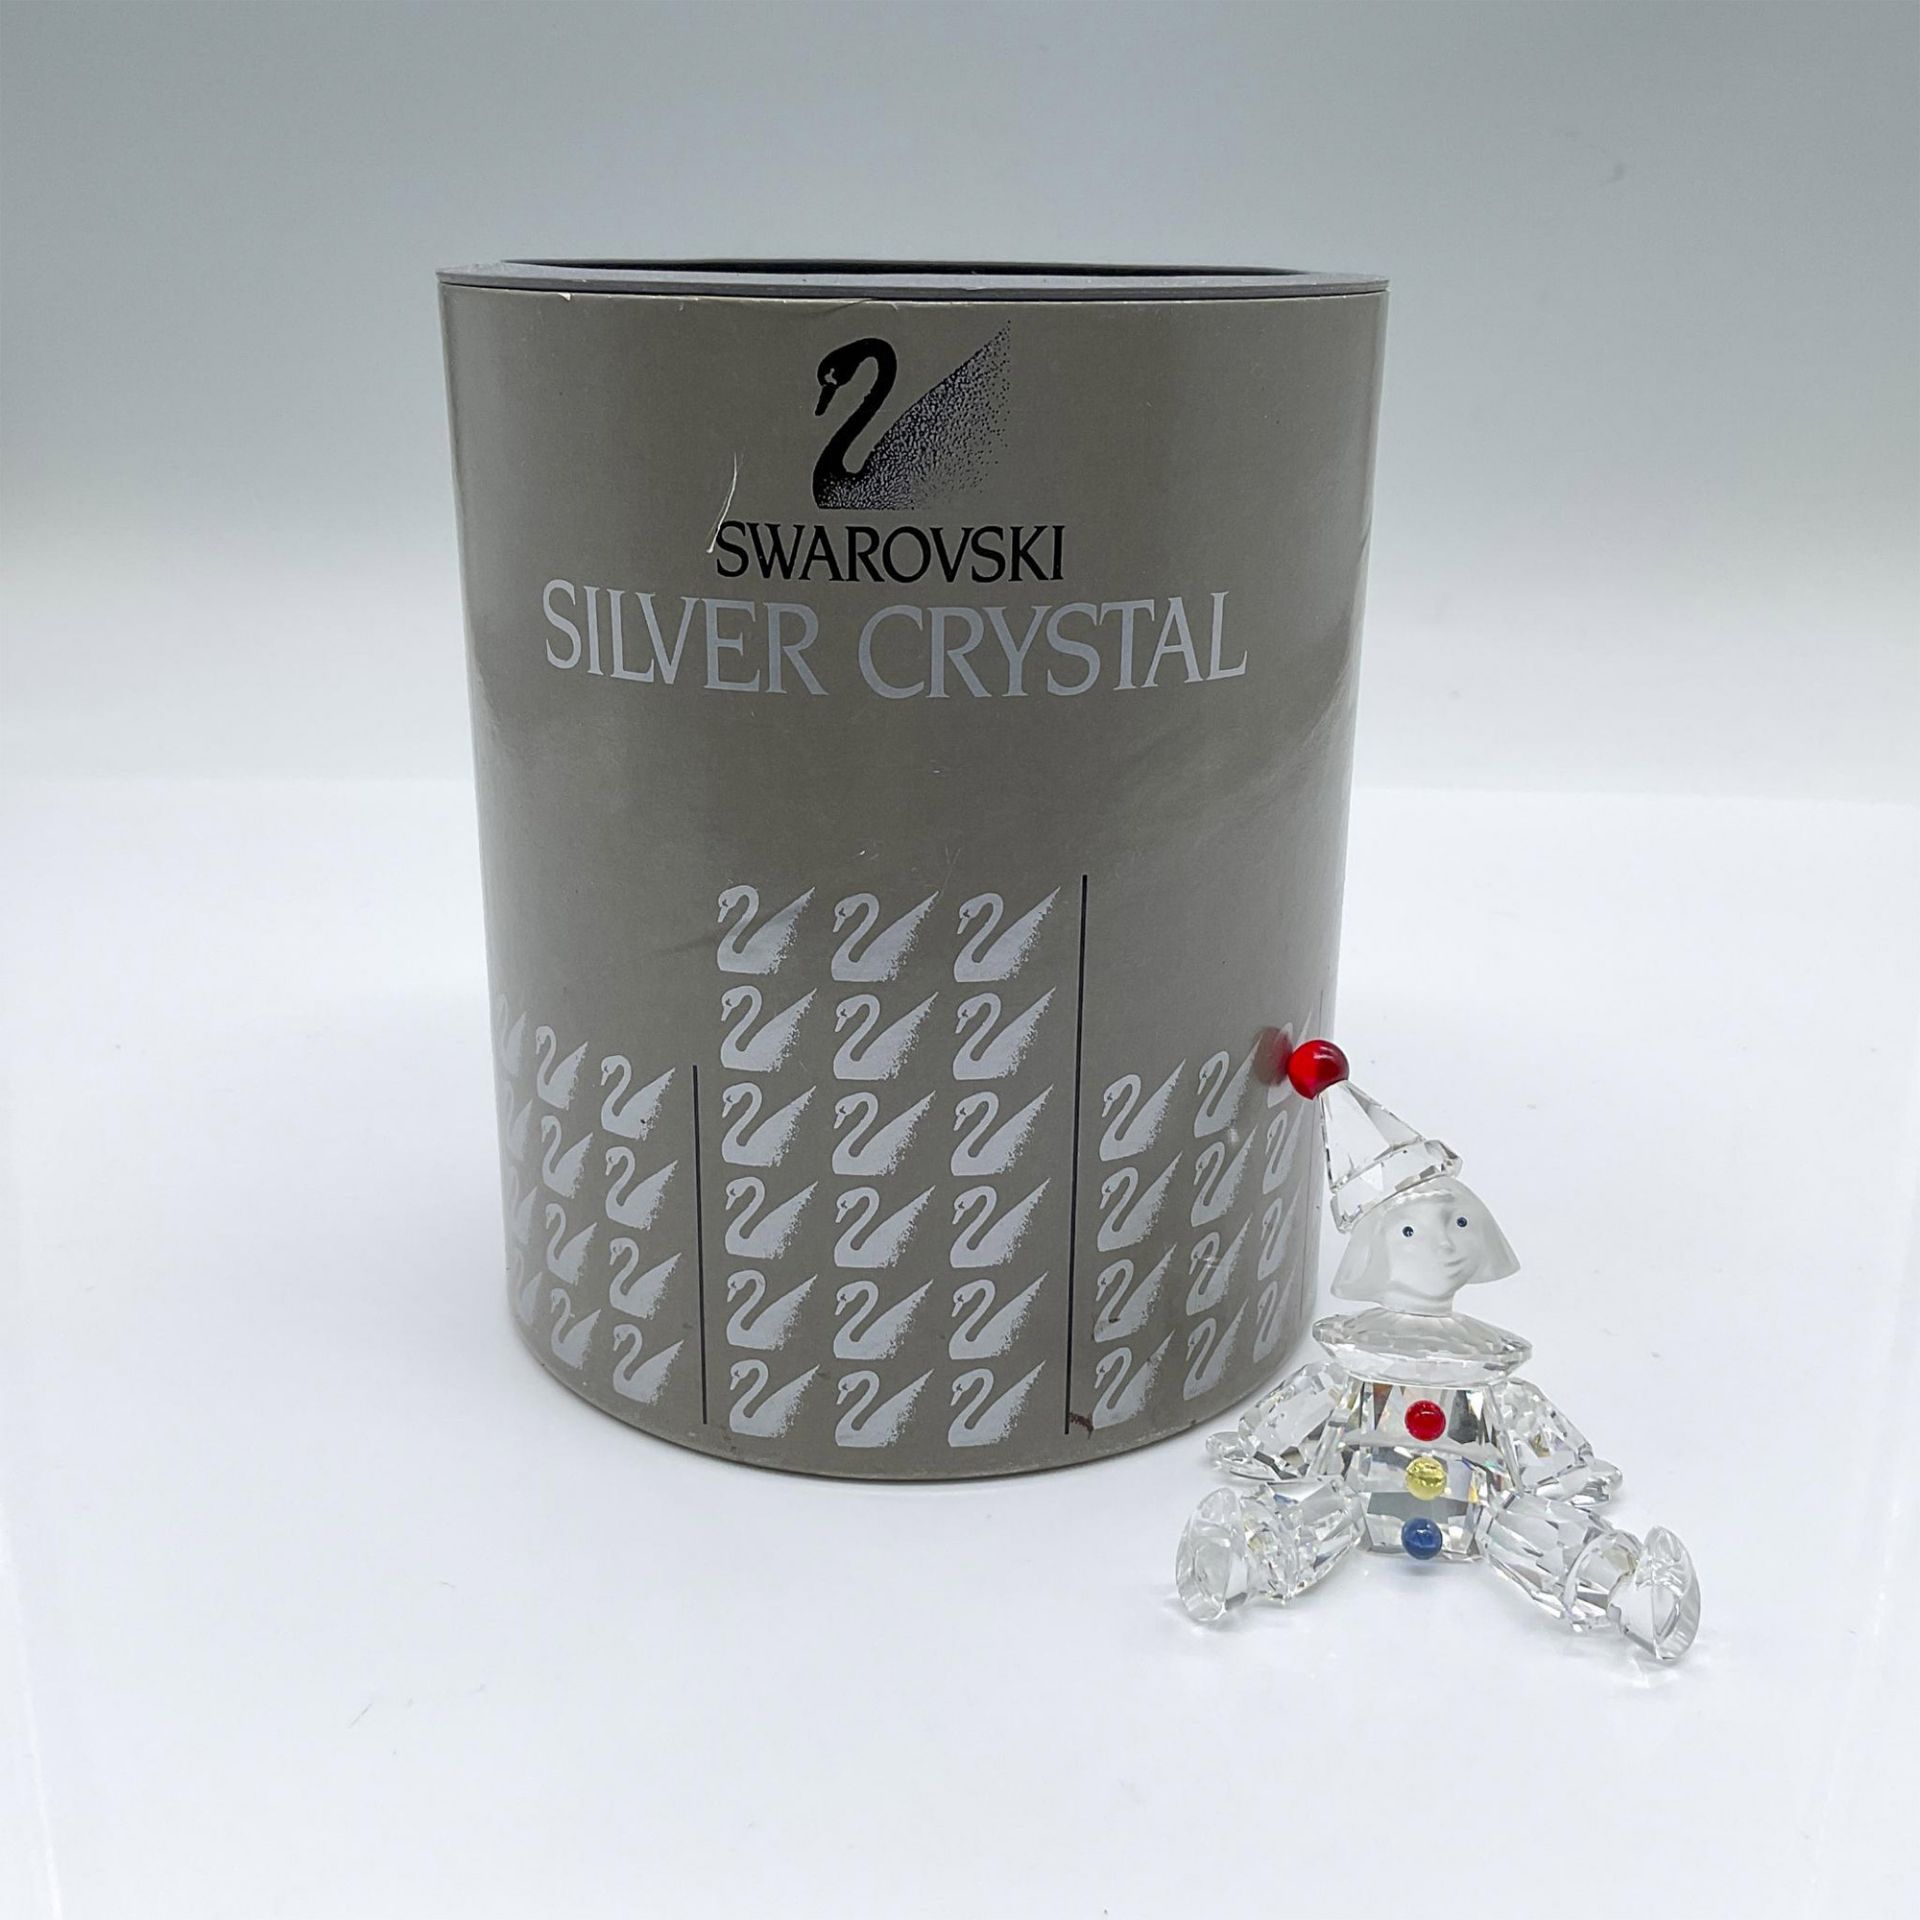 Swarovski Silver Crystal Figurine, Puppet - Image 2 of 4